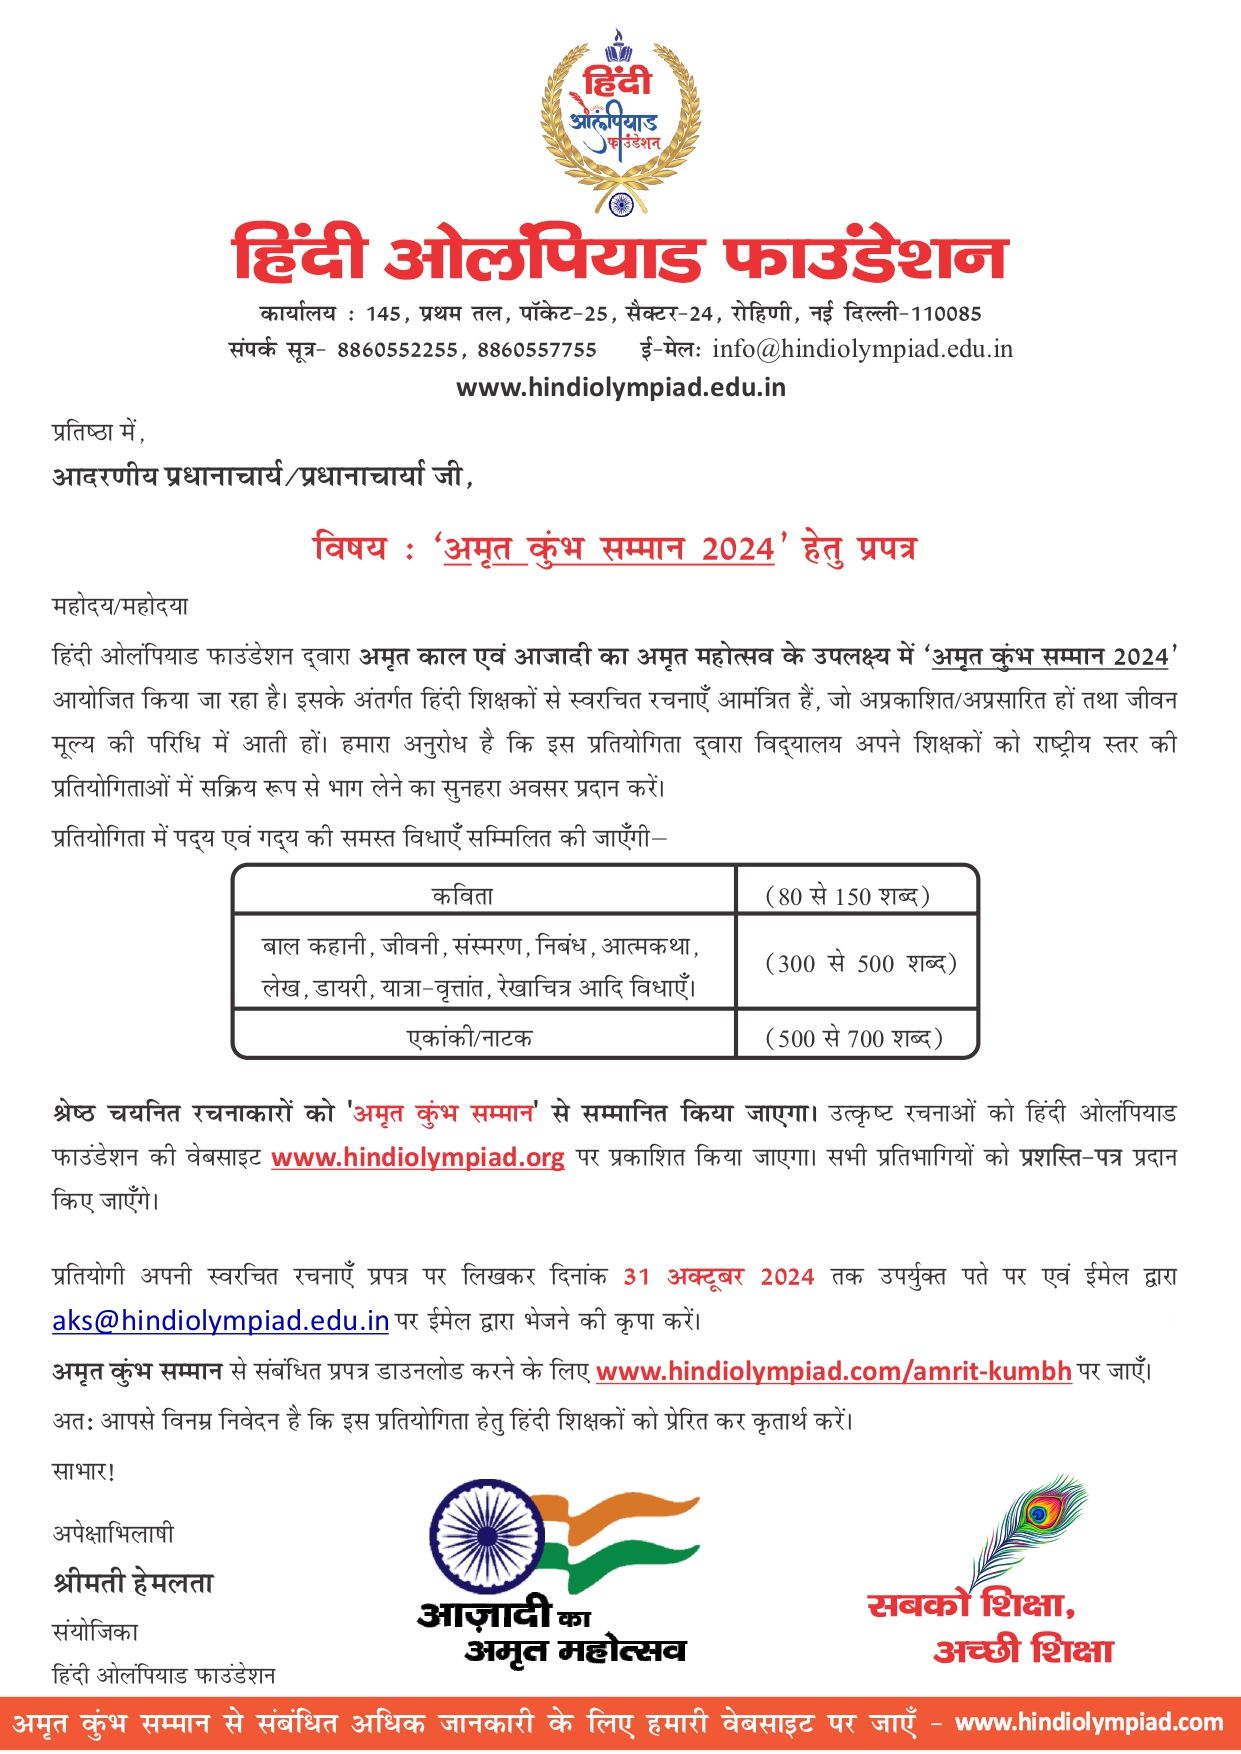 The Hindi Olympiad Foundation is inviting applications for International Hindi Olympiad 2024 & Amrit Kumbh Samman 2024